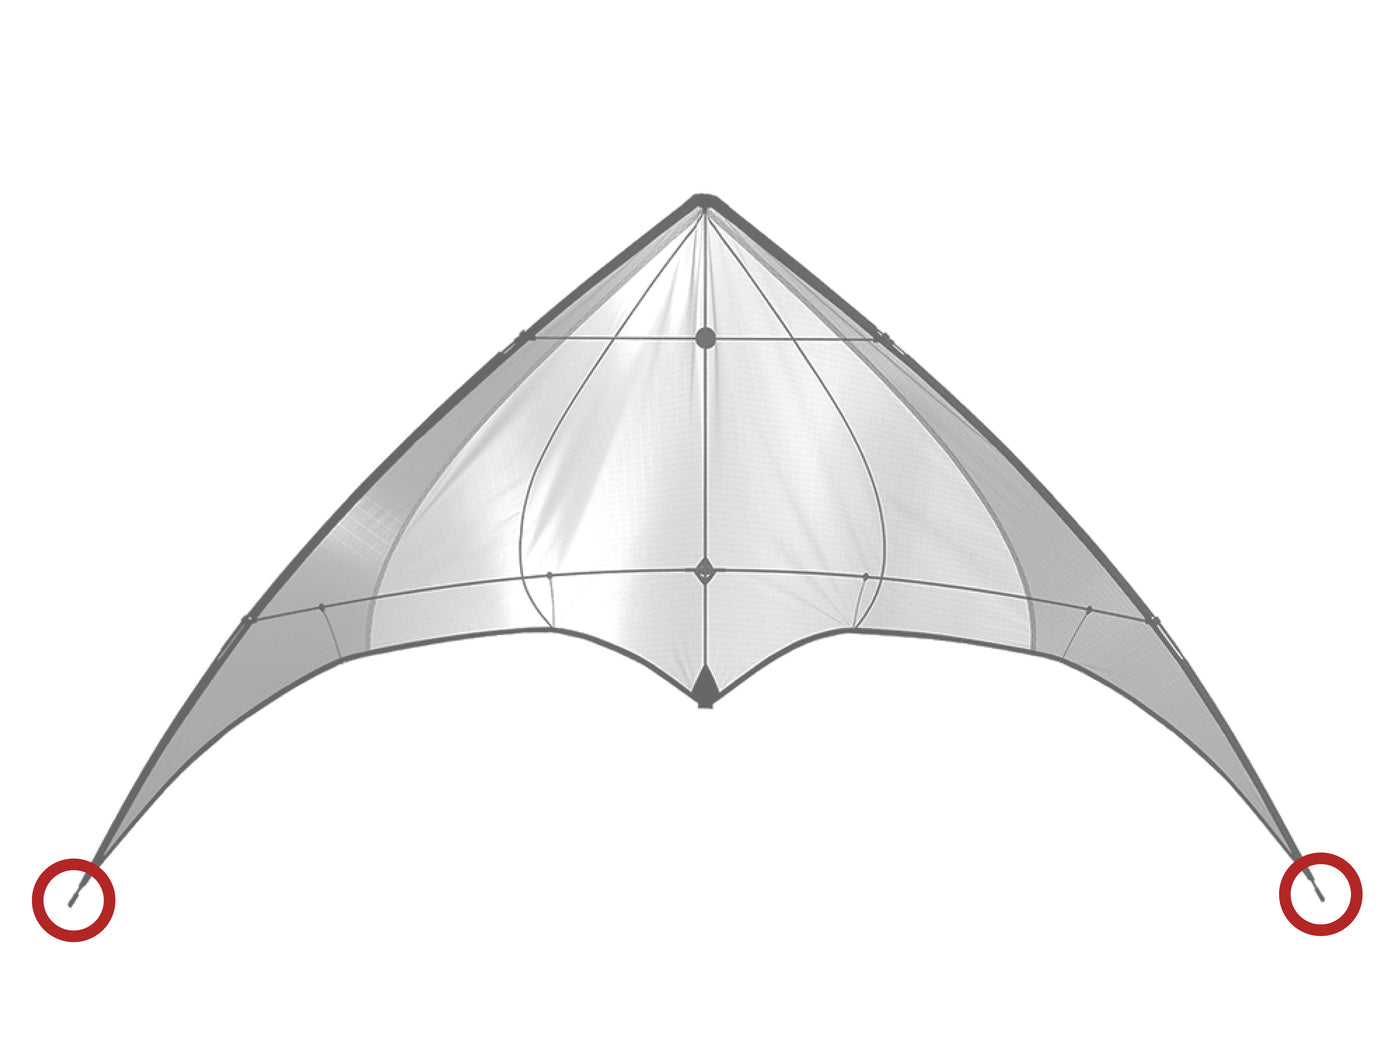 Diagram showing location of the Flashlight Wingtip Nocks on the kite.